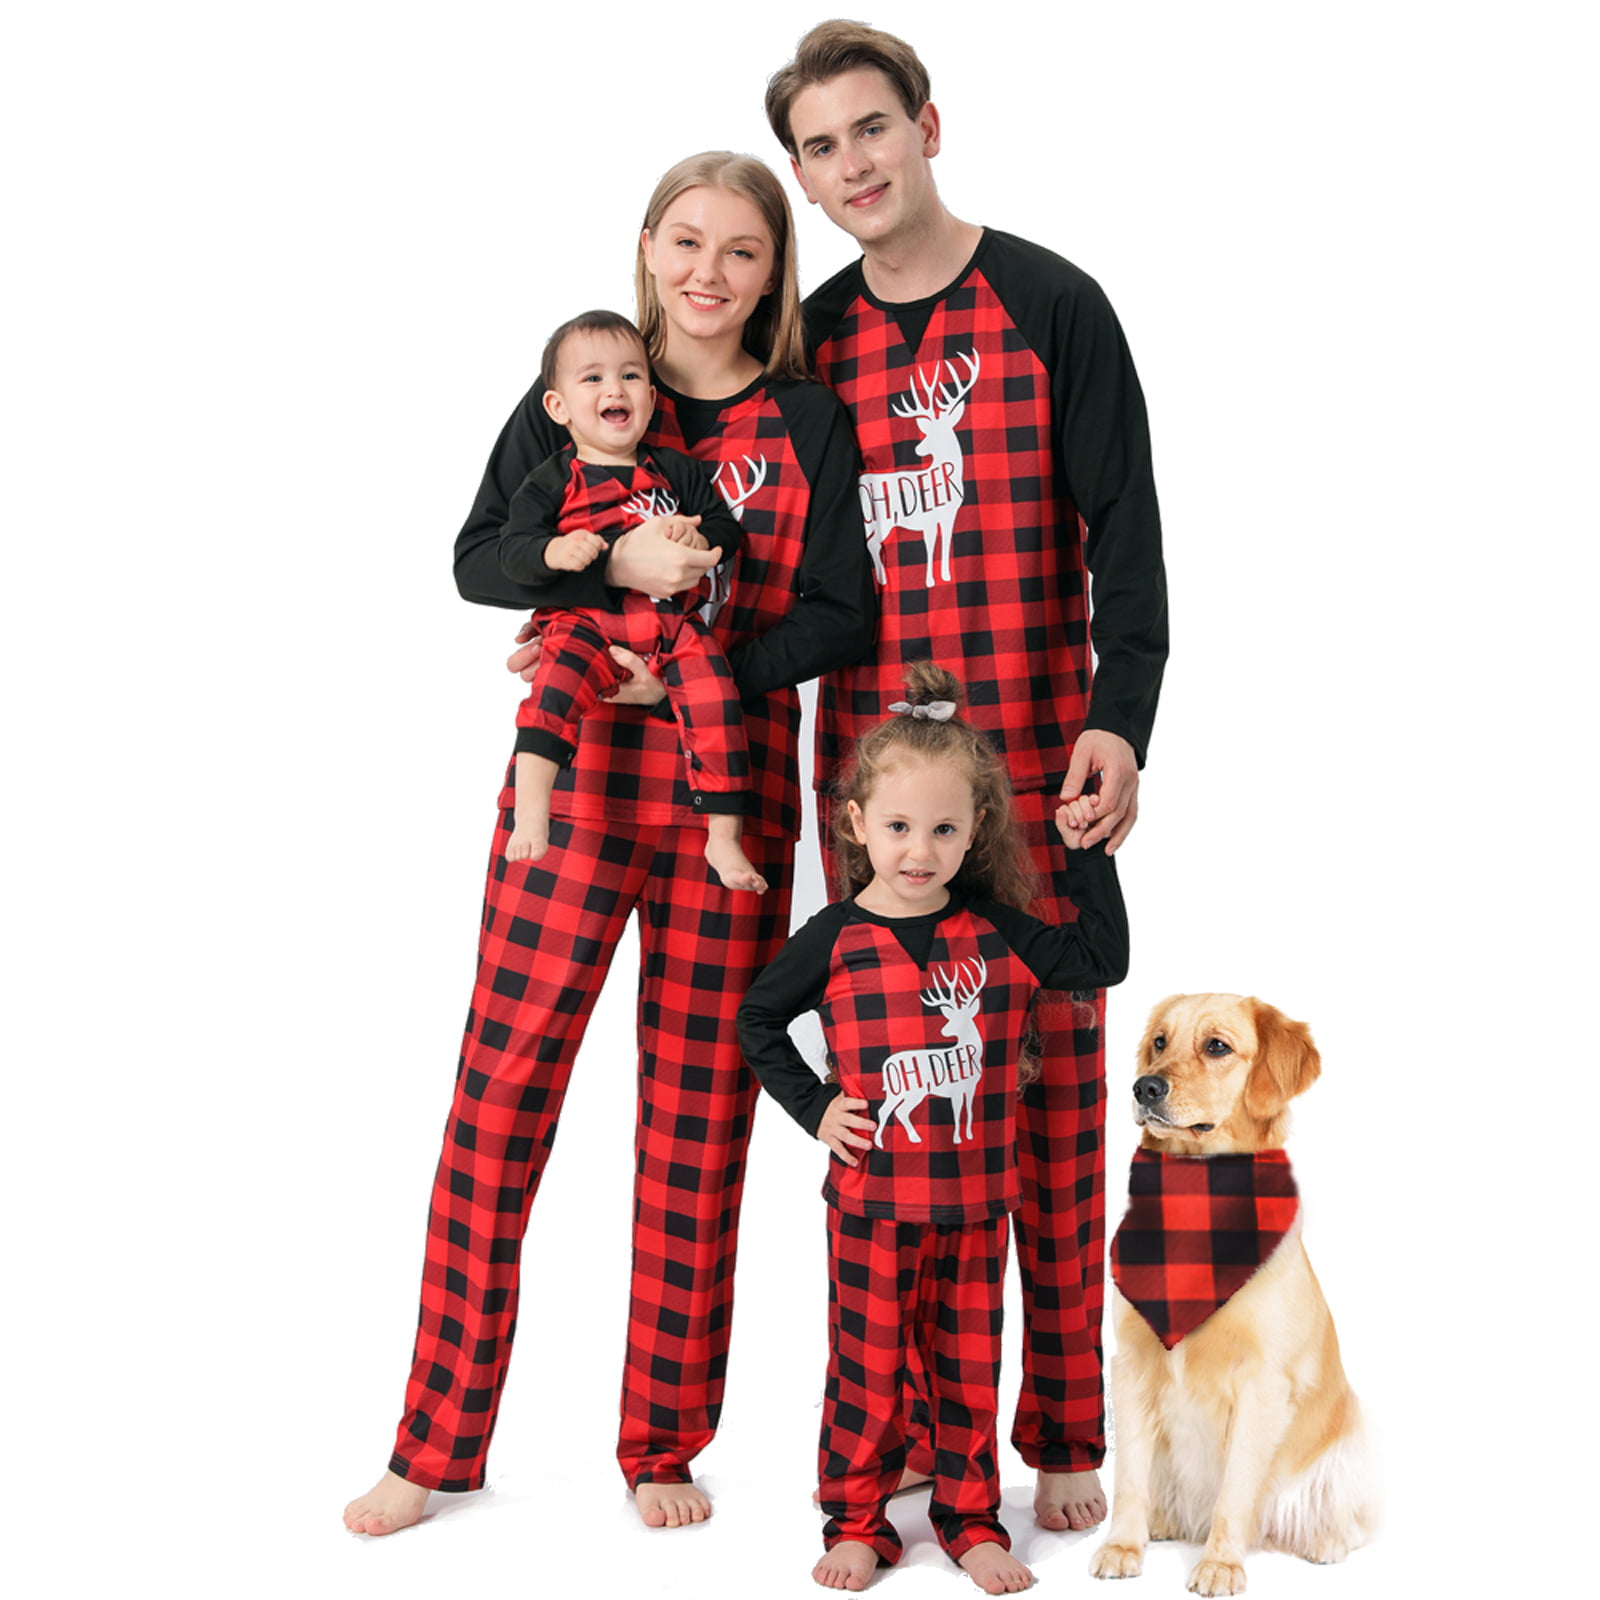 GXLONG Matching Family Pajamas Sets Christmas PJs Letter Printed Reindeer Long Sleeve Red Plaid Pants Xmas Loungewear